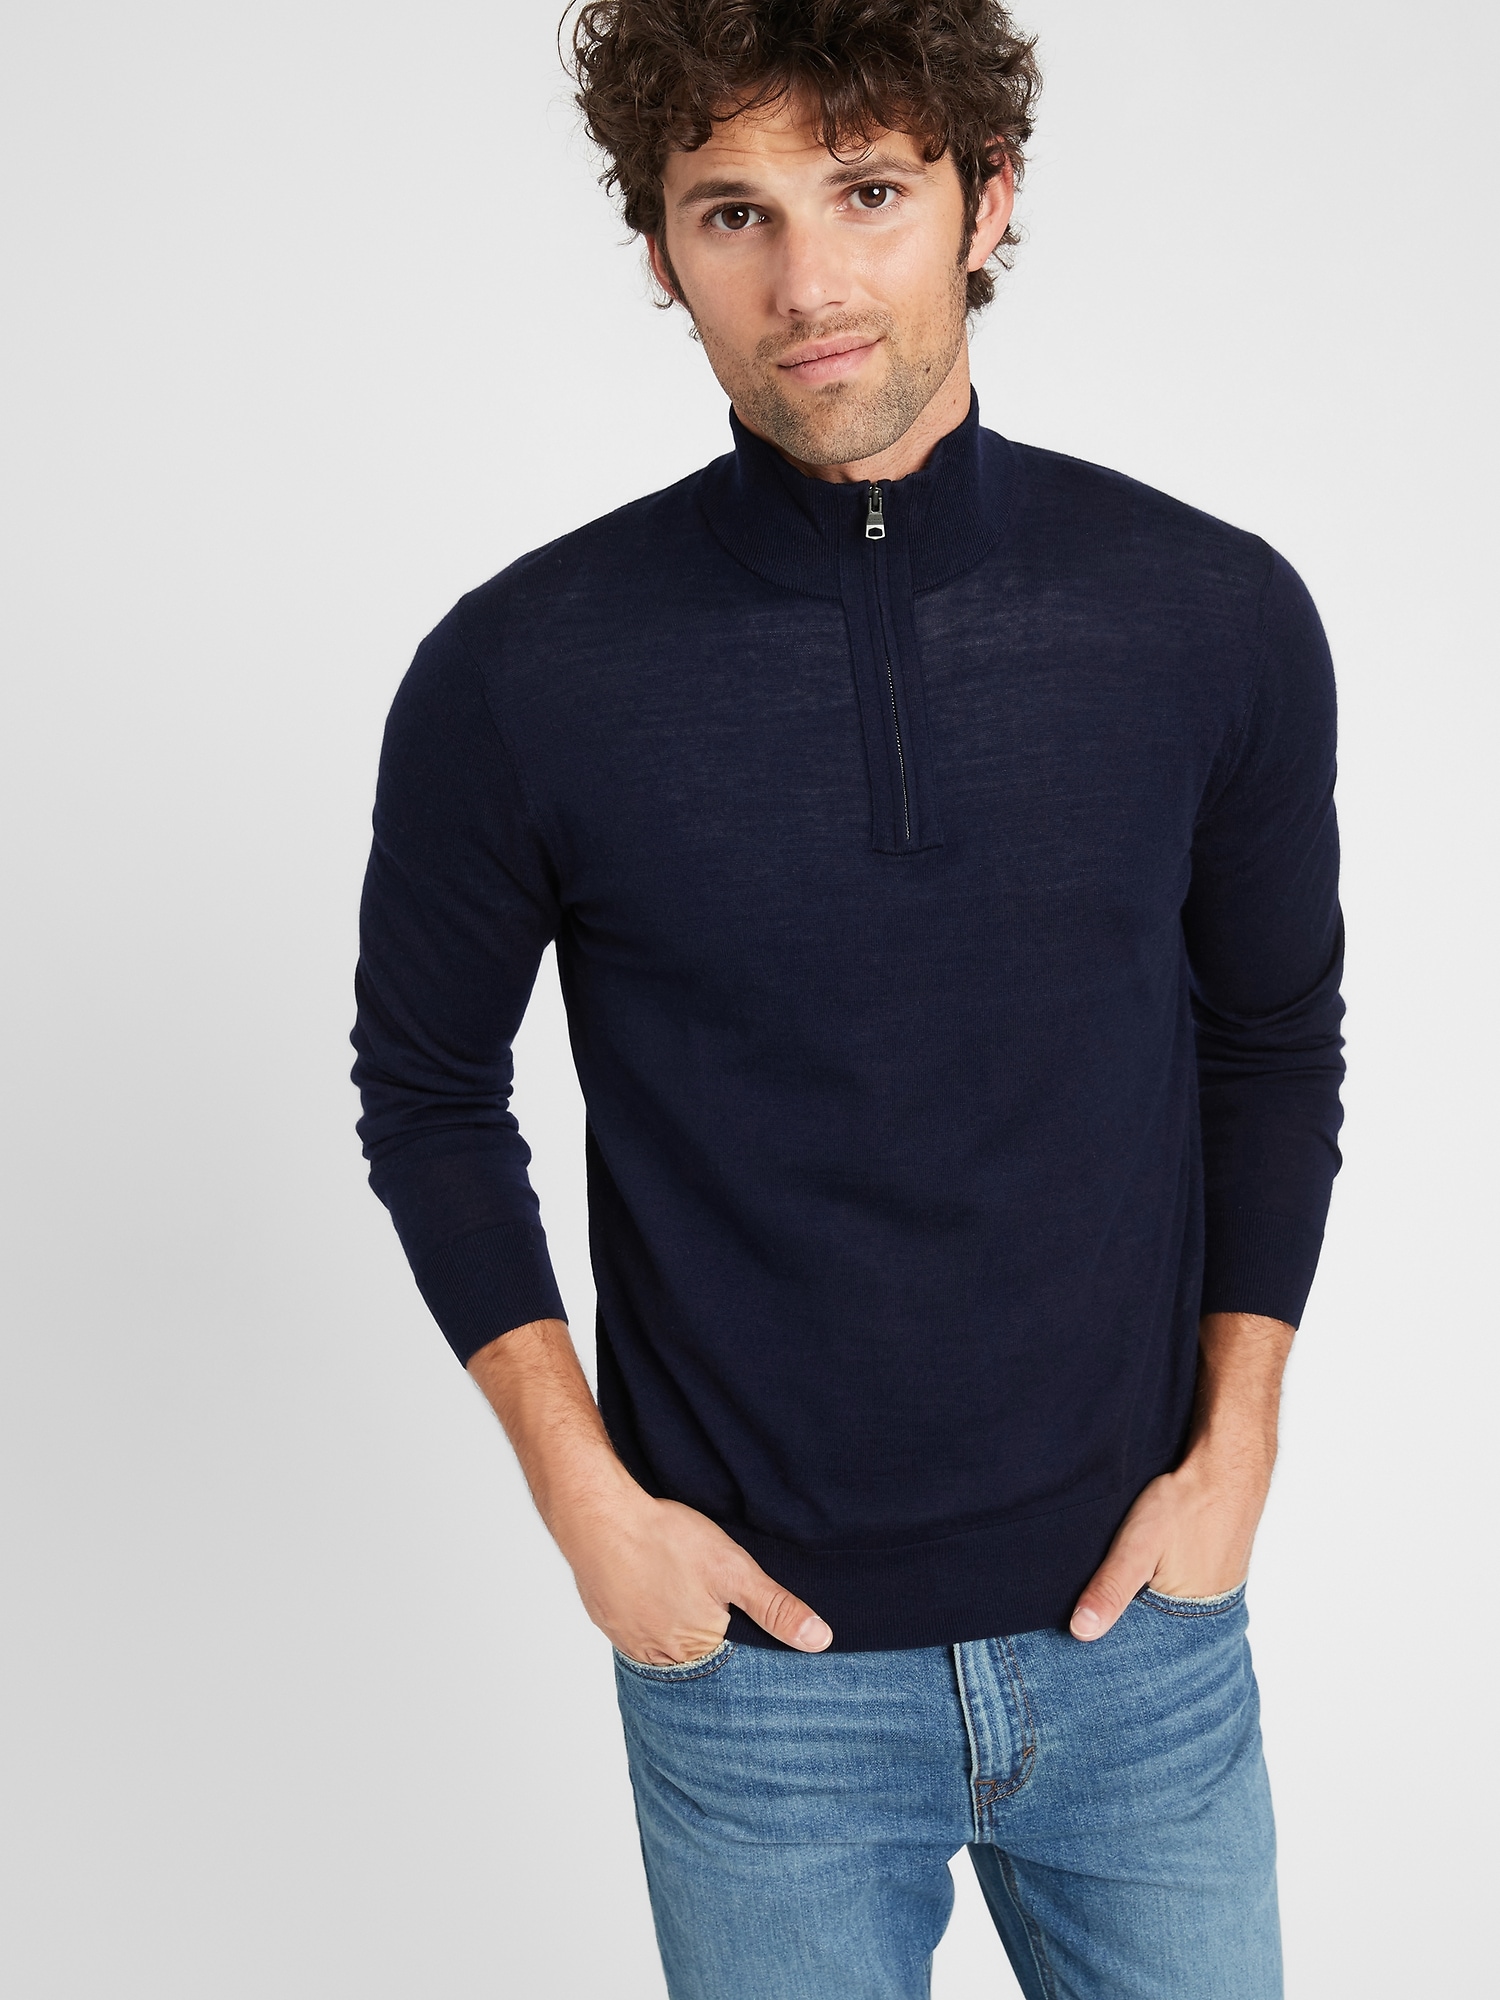 Merino Half-Zip Sweater in Responsible Wool | Banana Republic